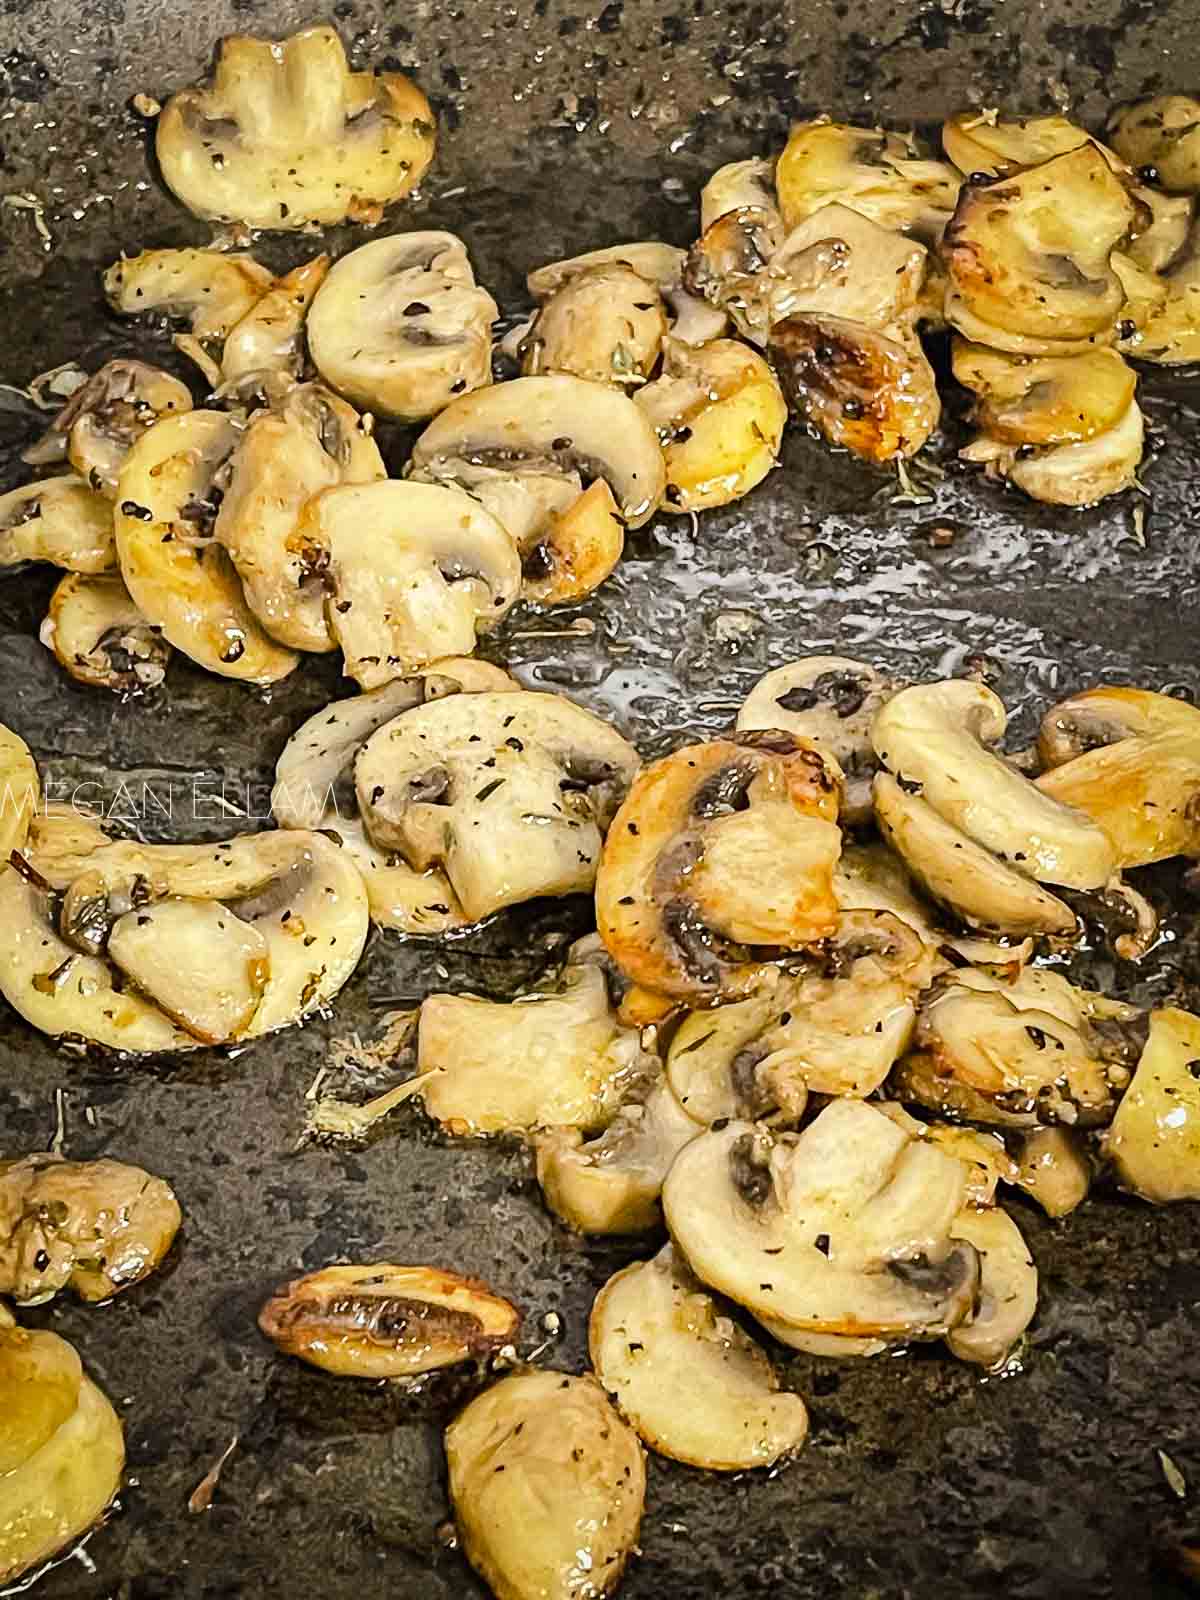 Sauteed mushrooms in a frying pan.